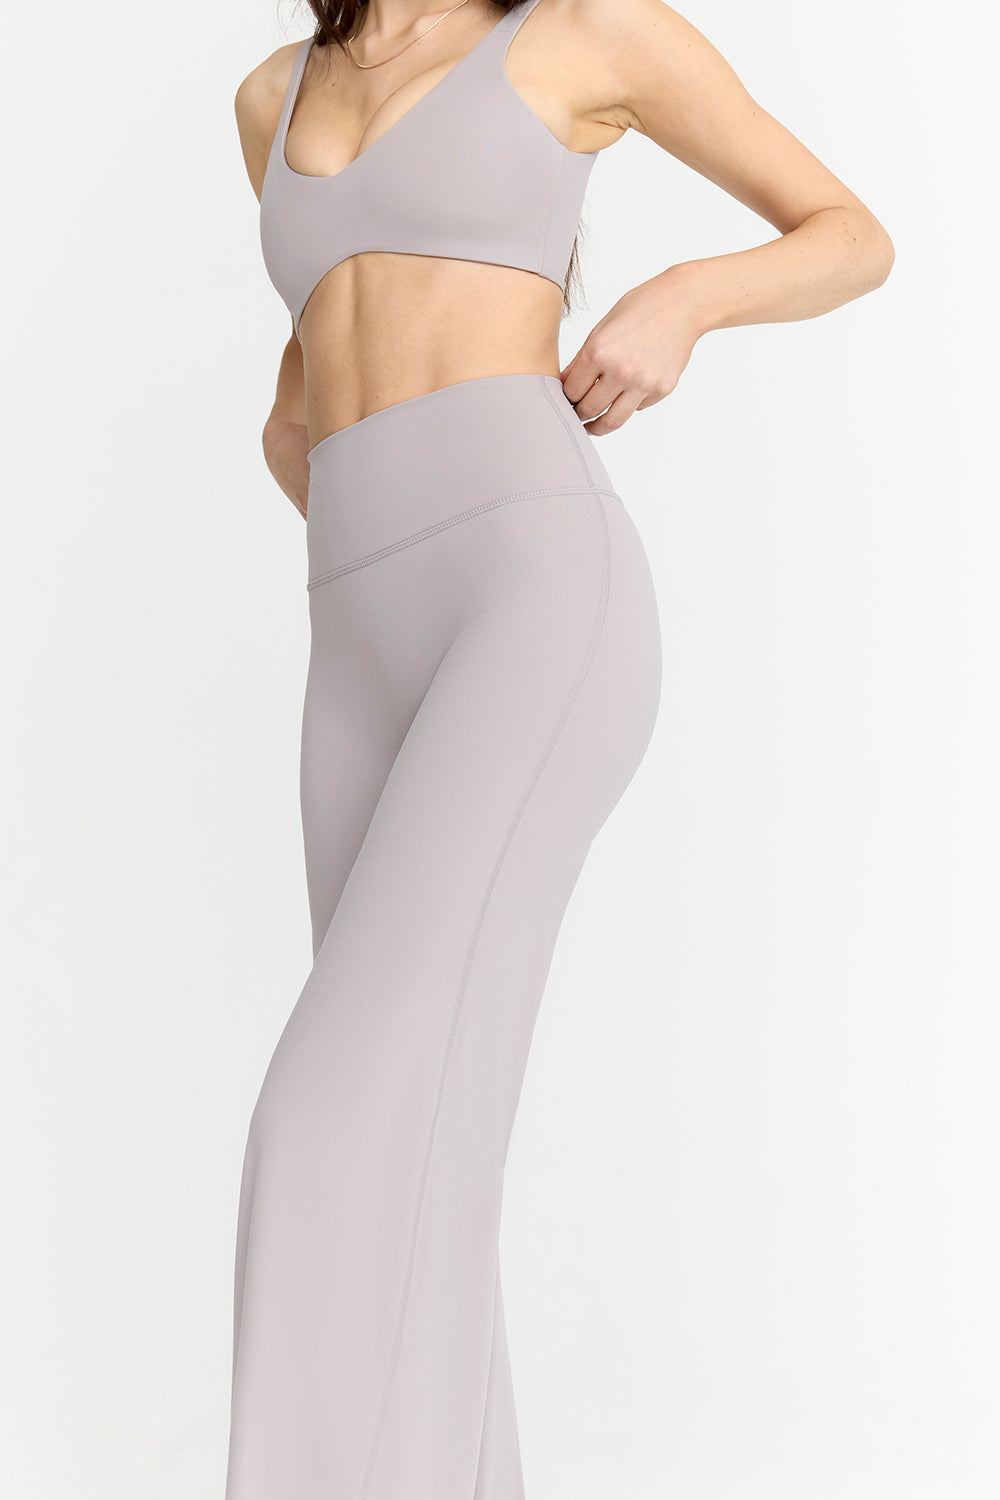 DayFlex High Waisted Flared Yoga Pants - Grey Marl